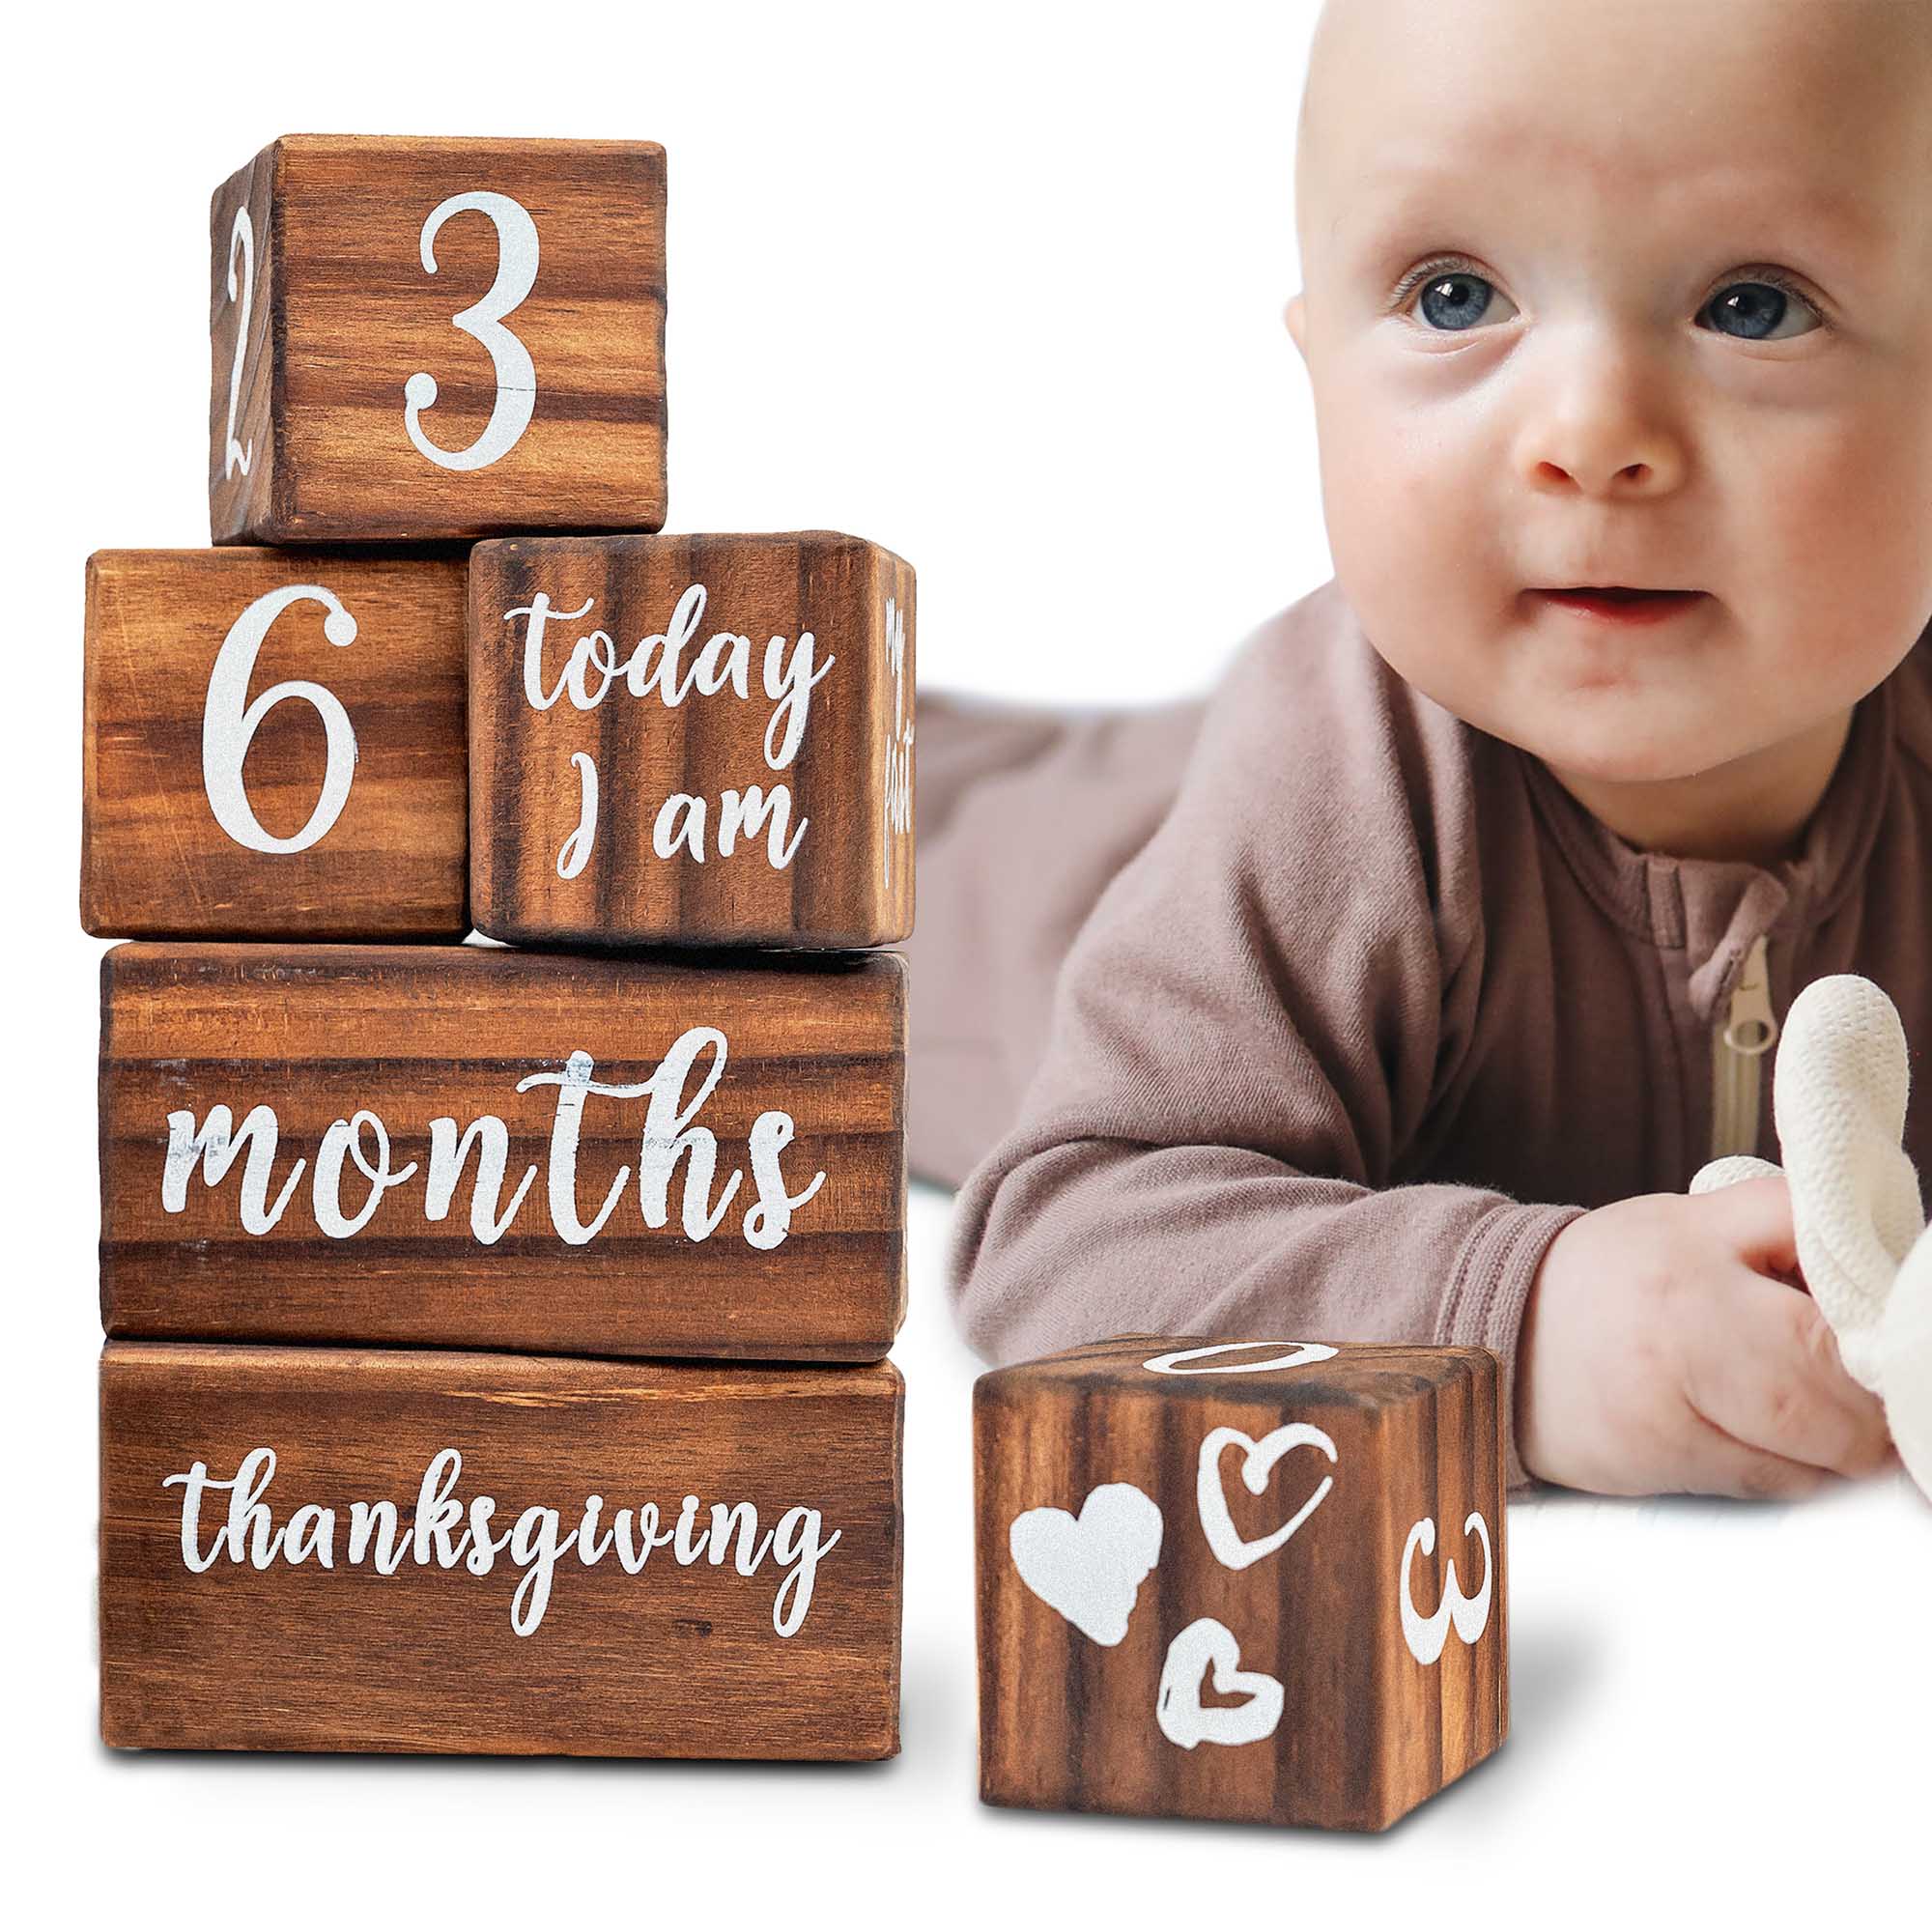 Wooden Milestone Baby Blocks